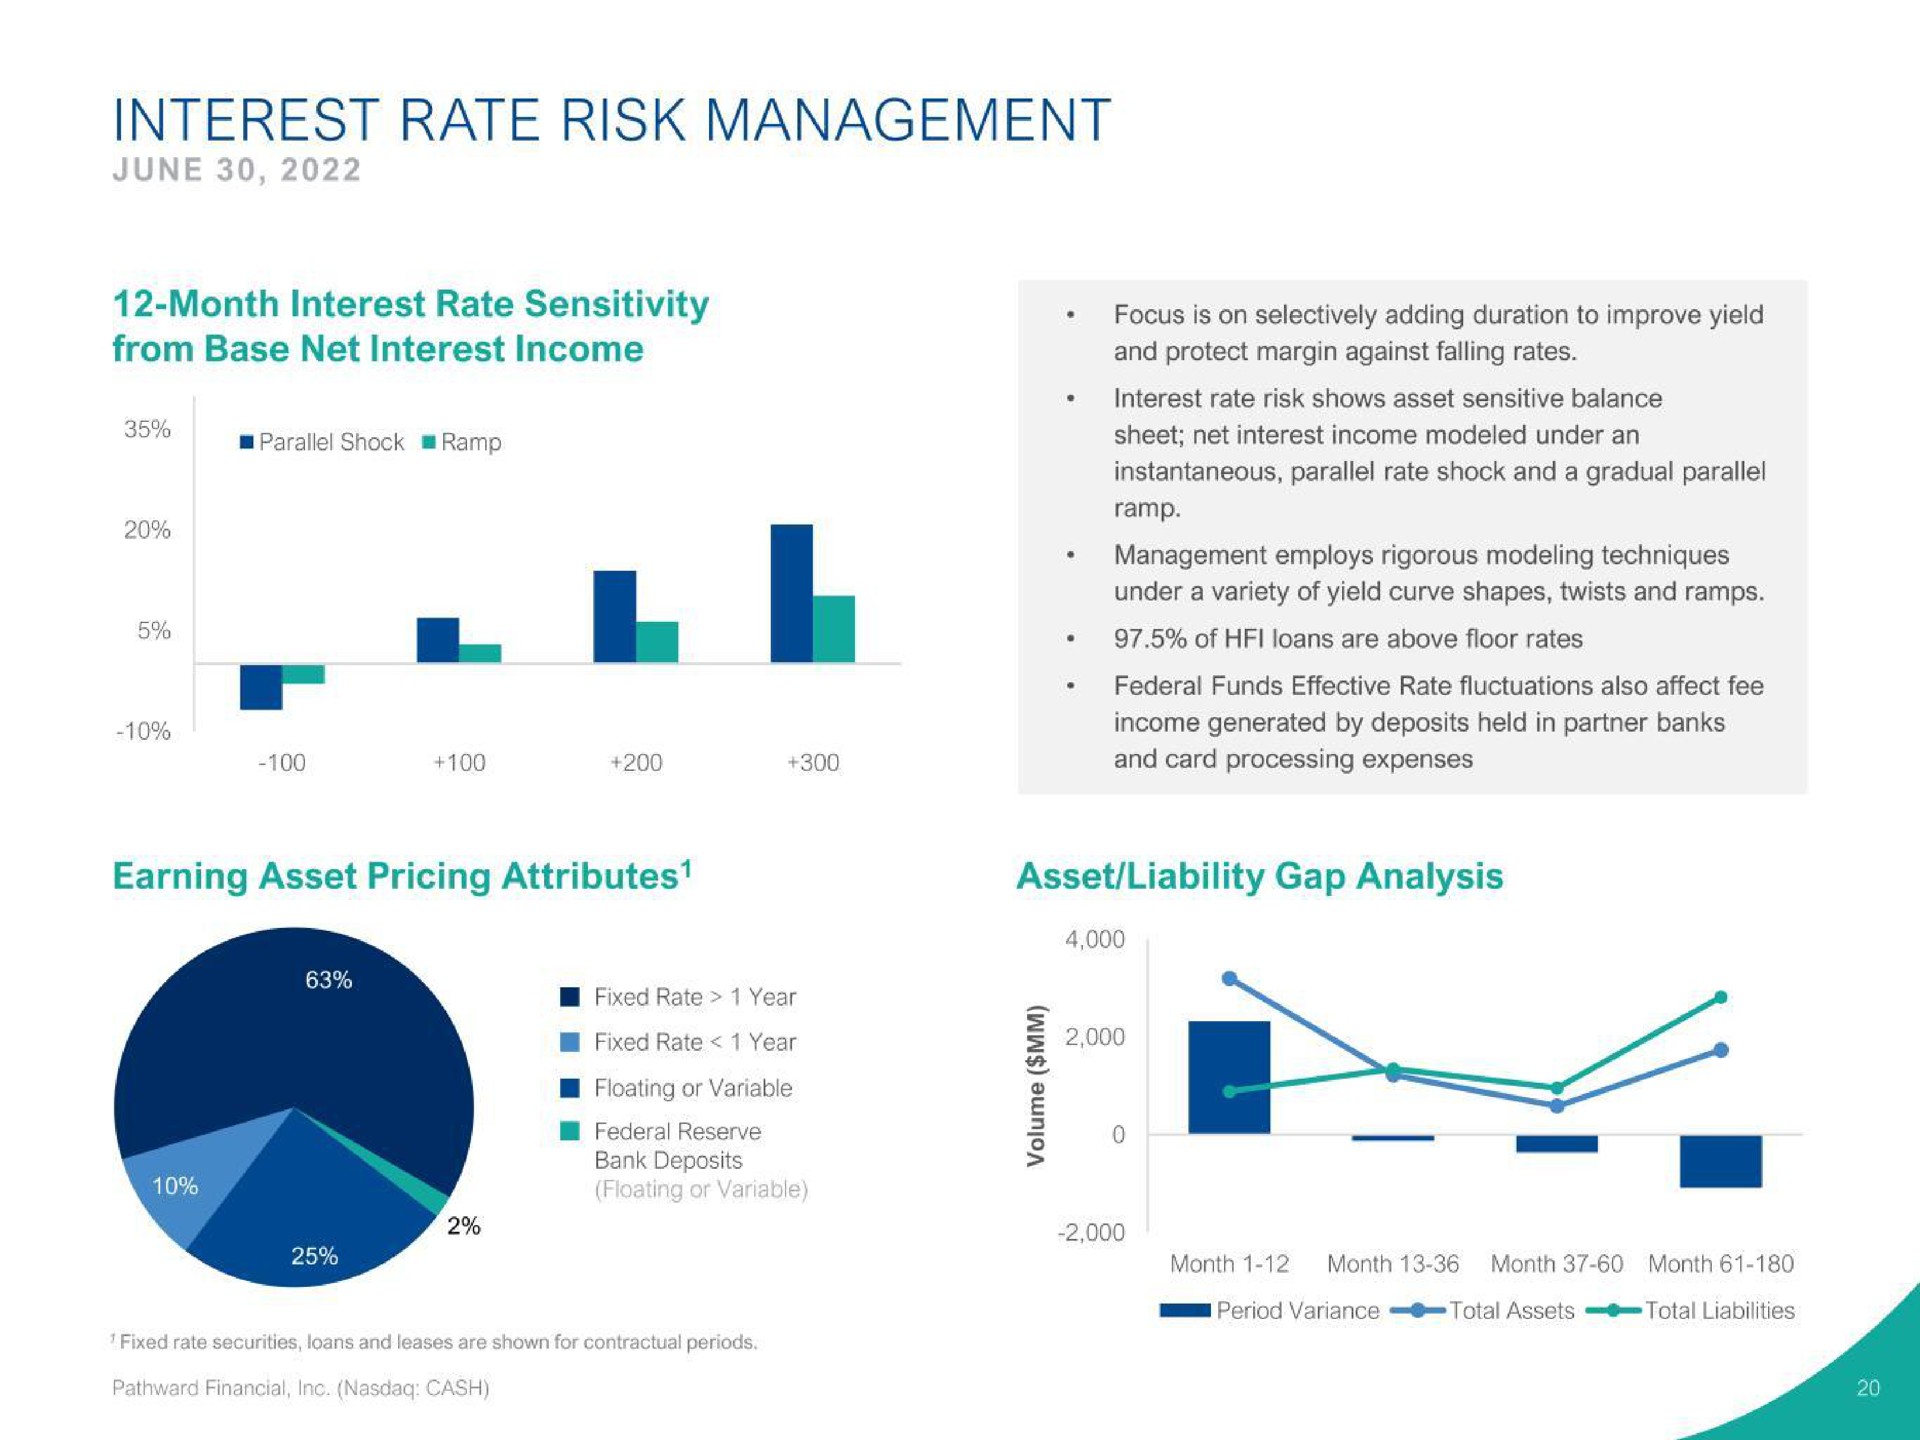 interest rate risk management | Pathward Financial